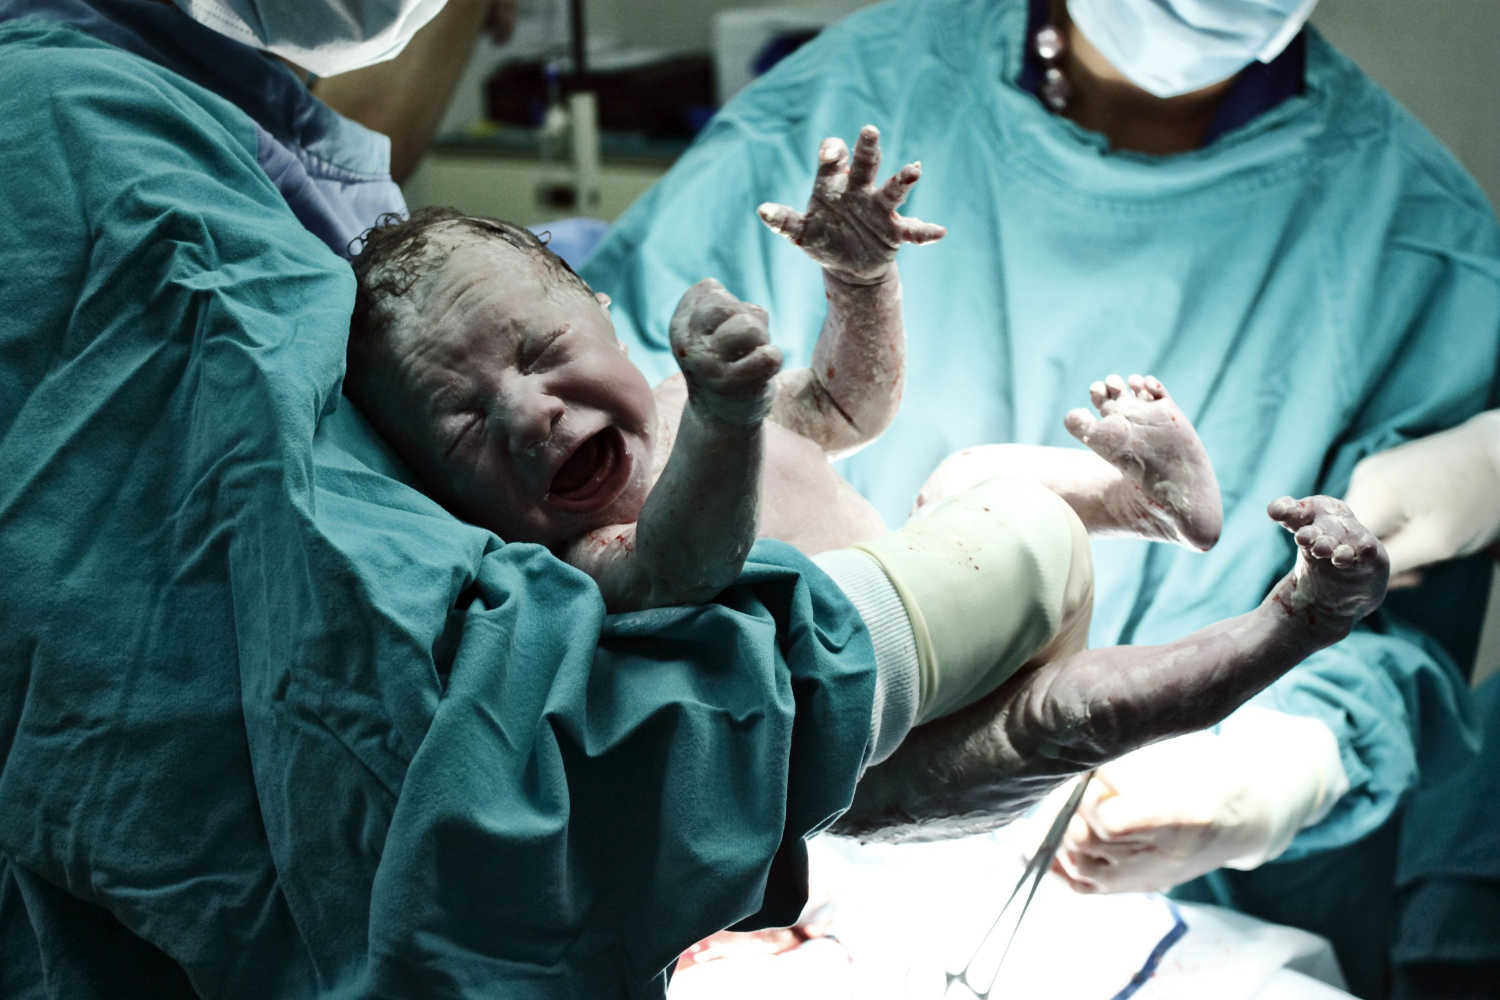 newborn baby and doctors